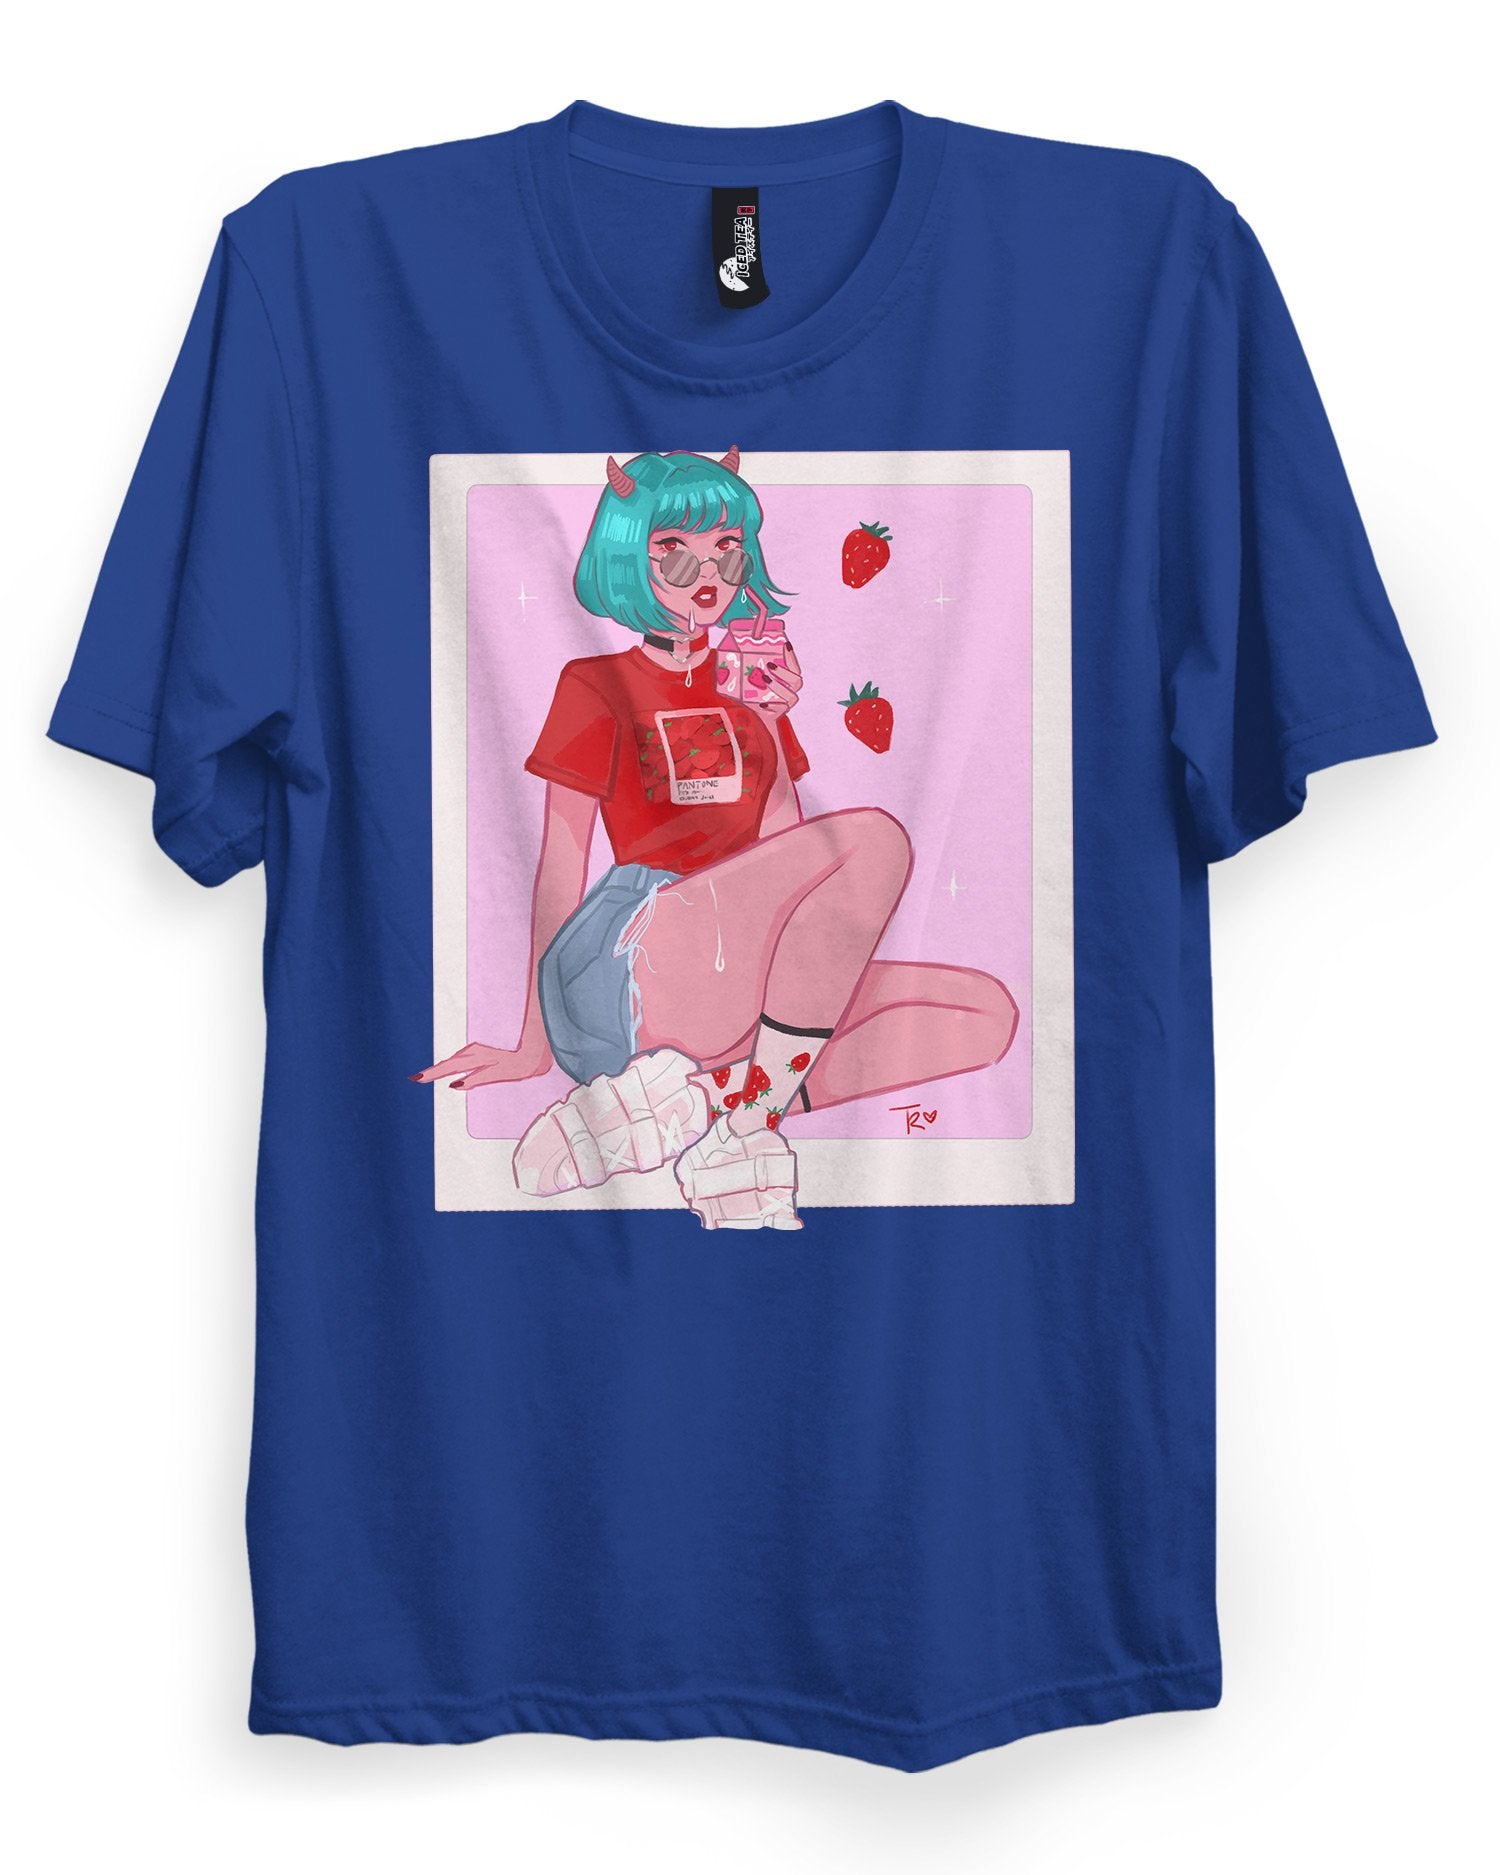 Strawberry - Pastel T-Shirt - Dark Aesthetics and Anime Clothing Streetwear